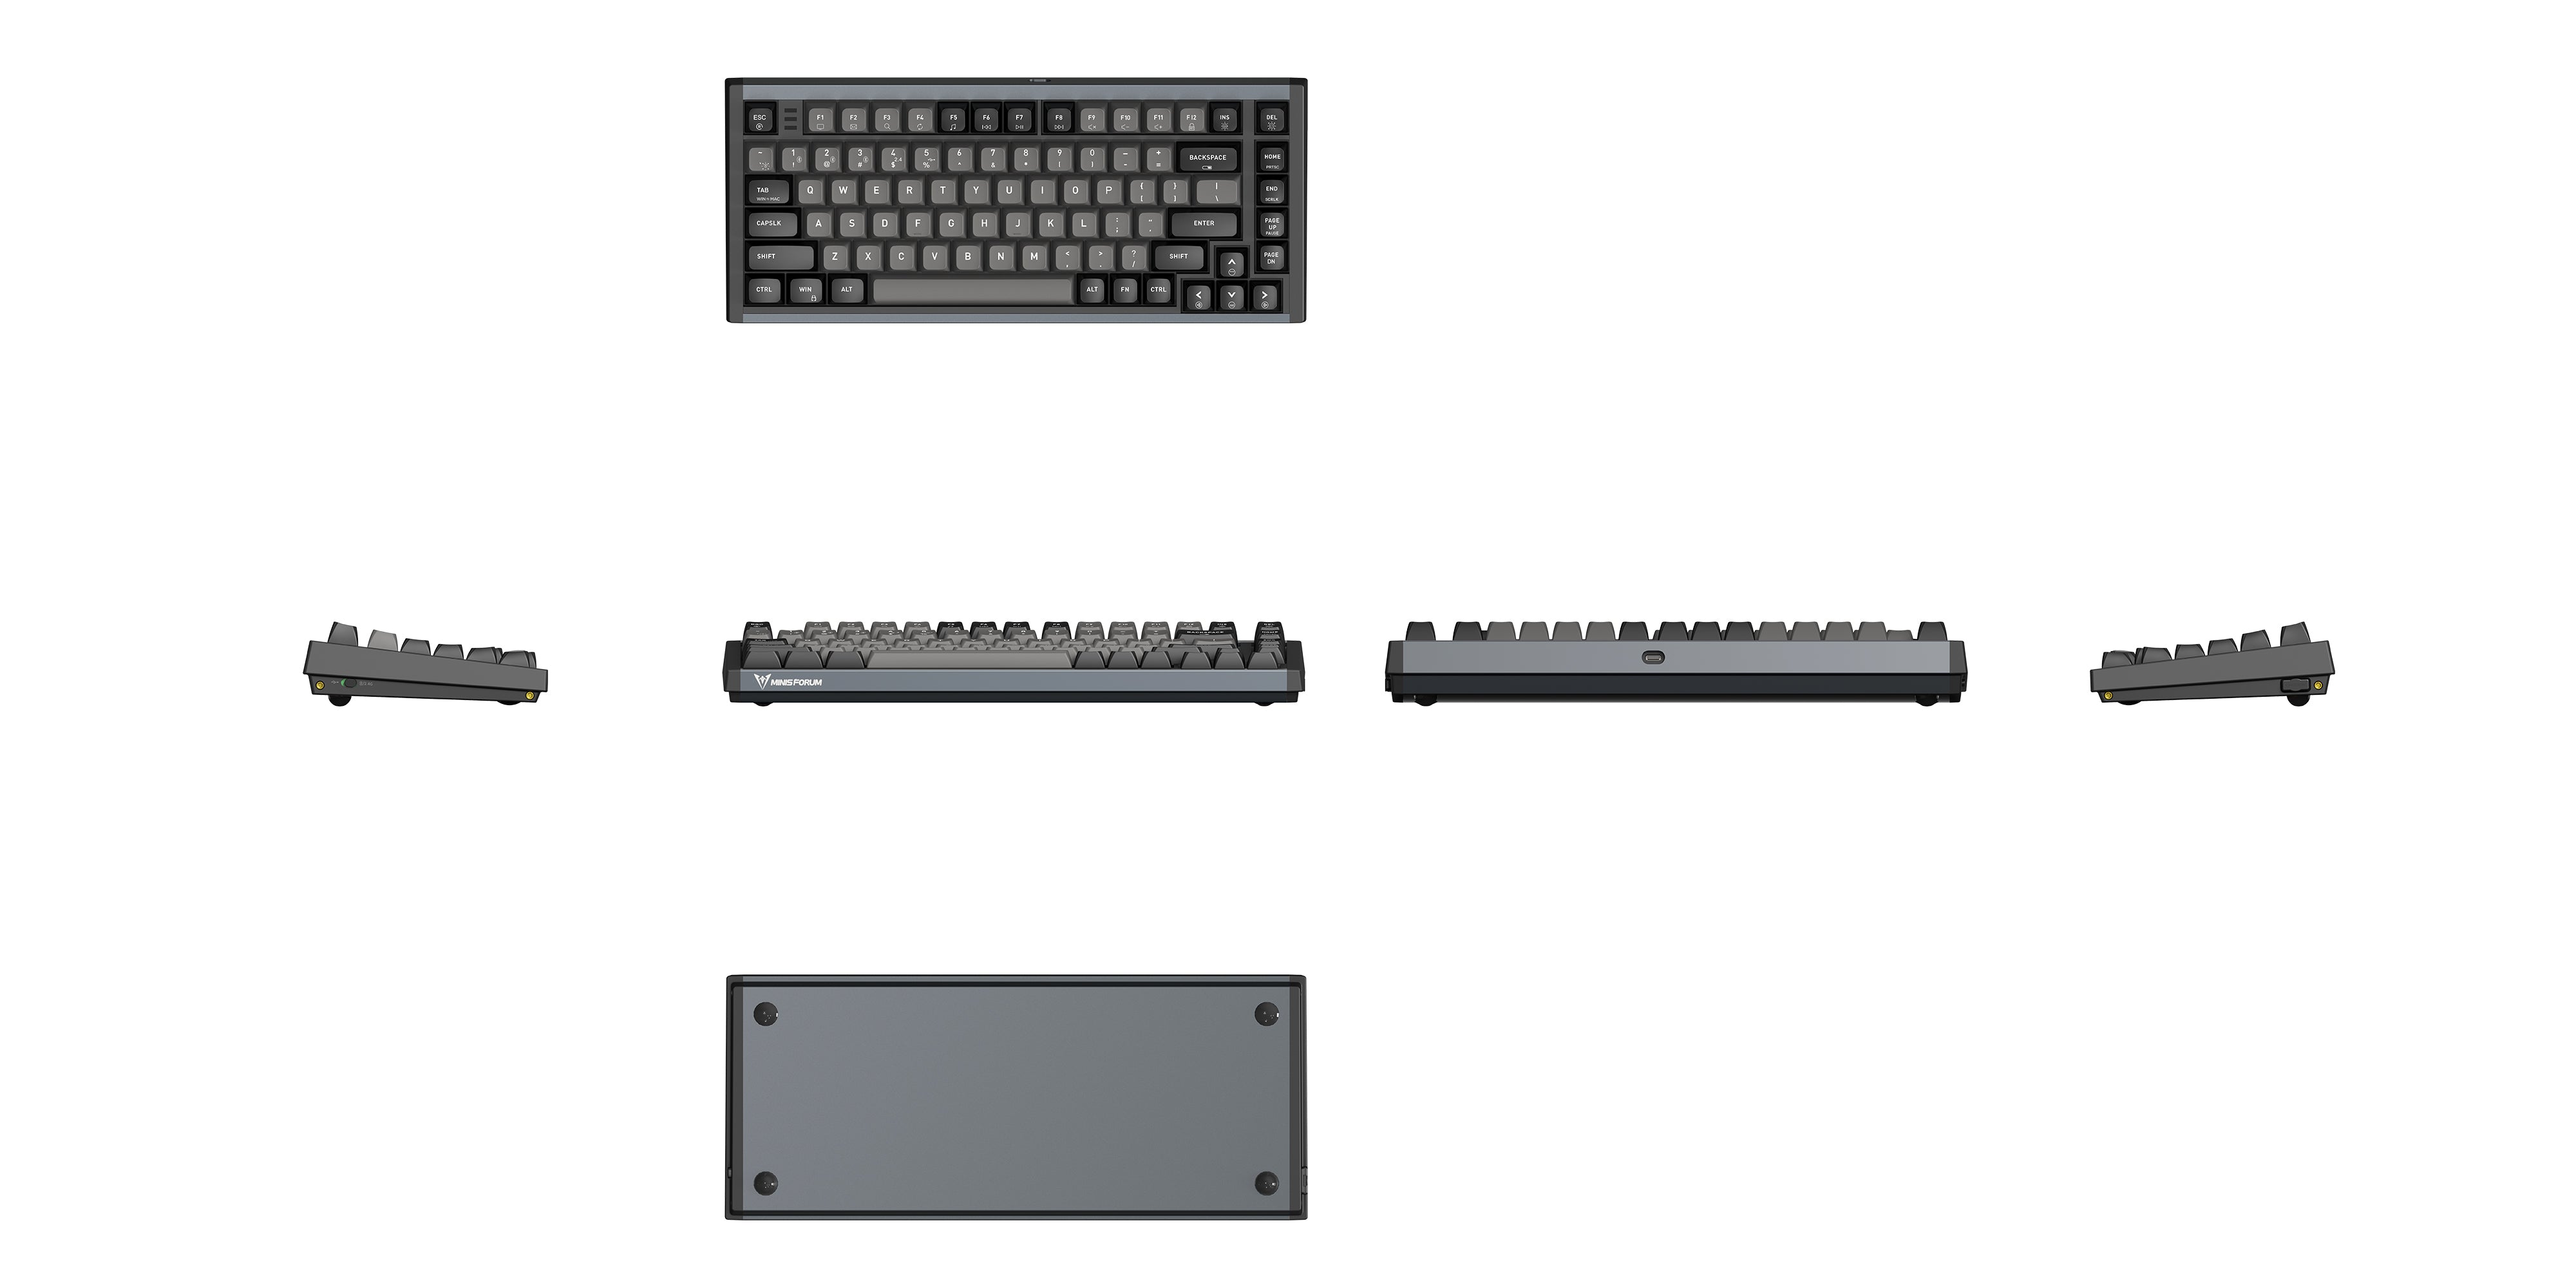 MKB i83 Keyboard